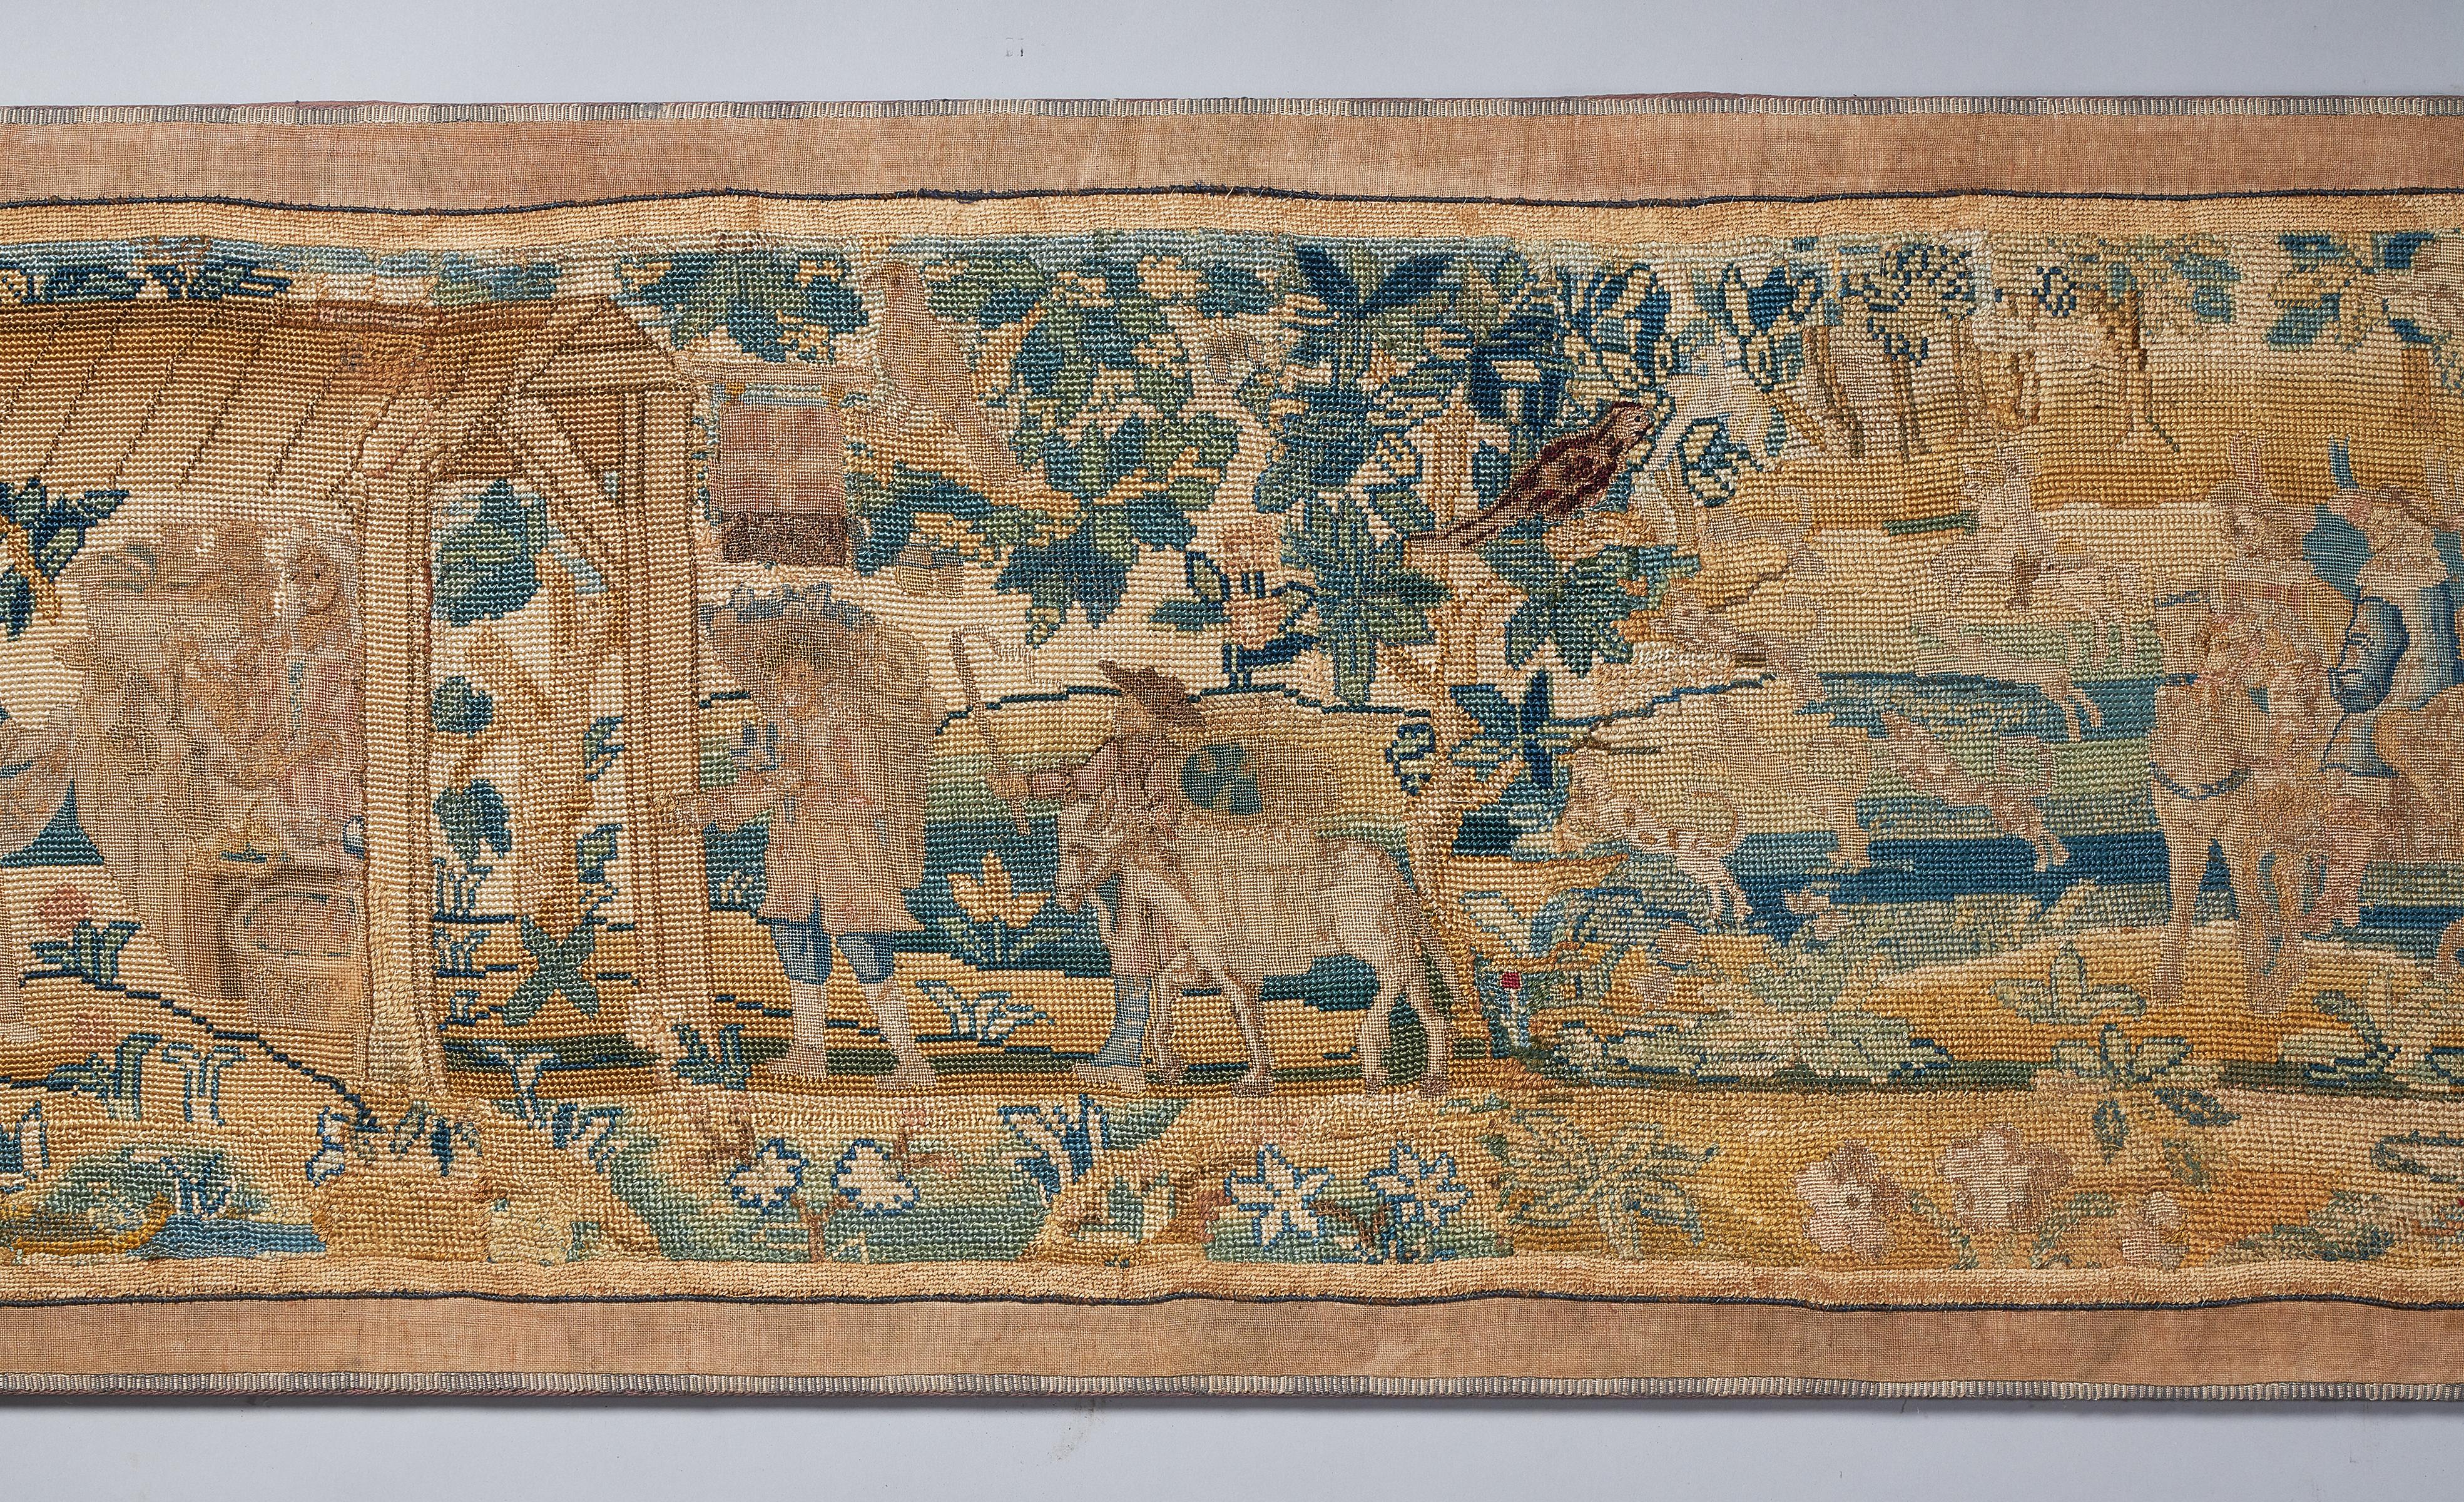 Baroque 17th Century North Italian Needlework Tapestry, circa 1680